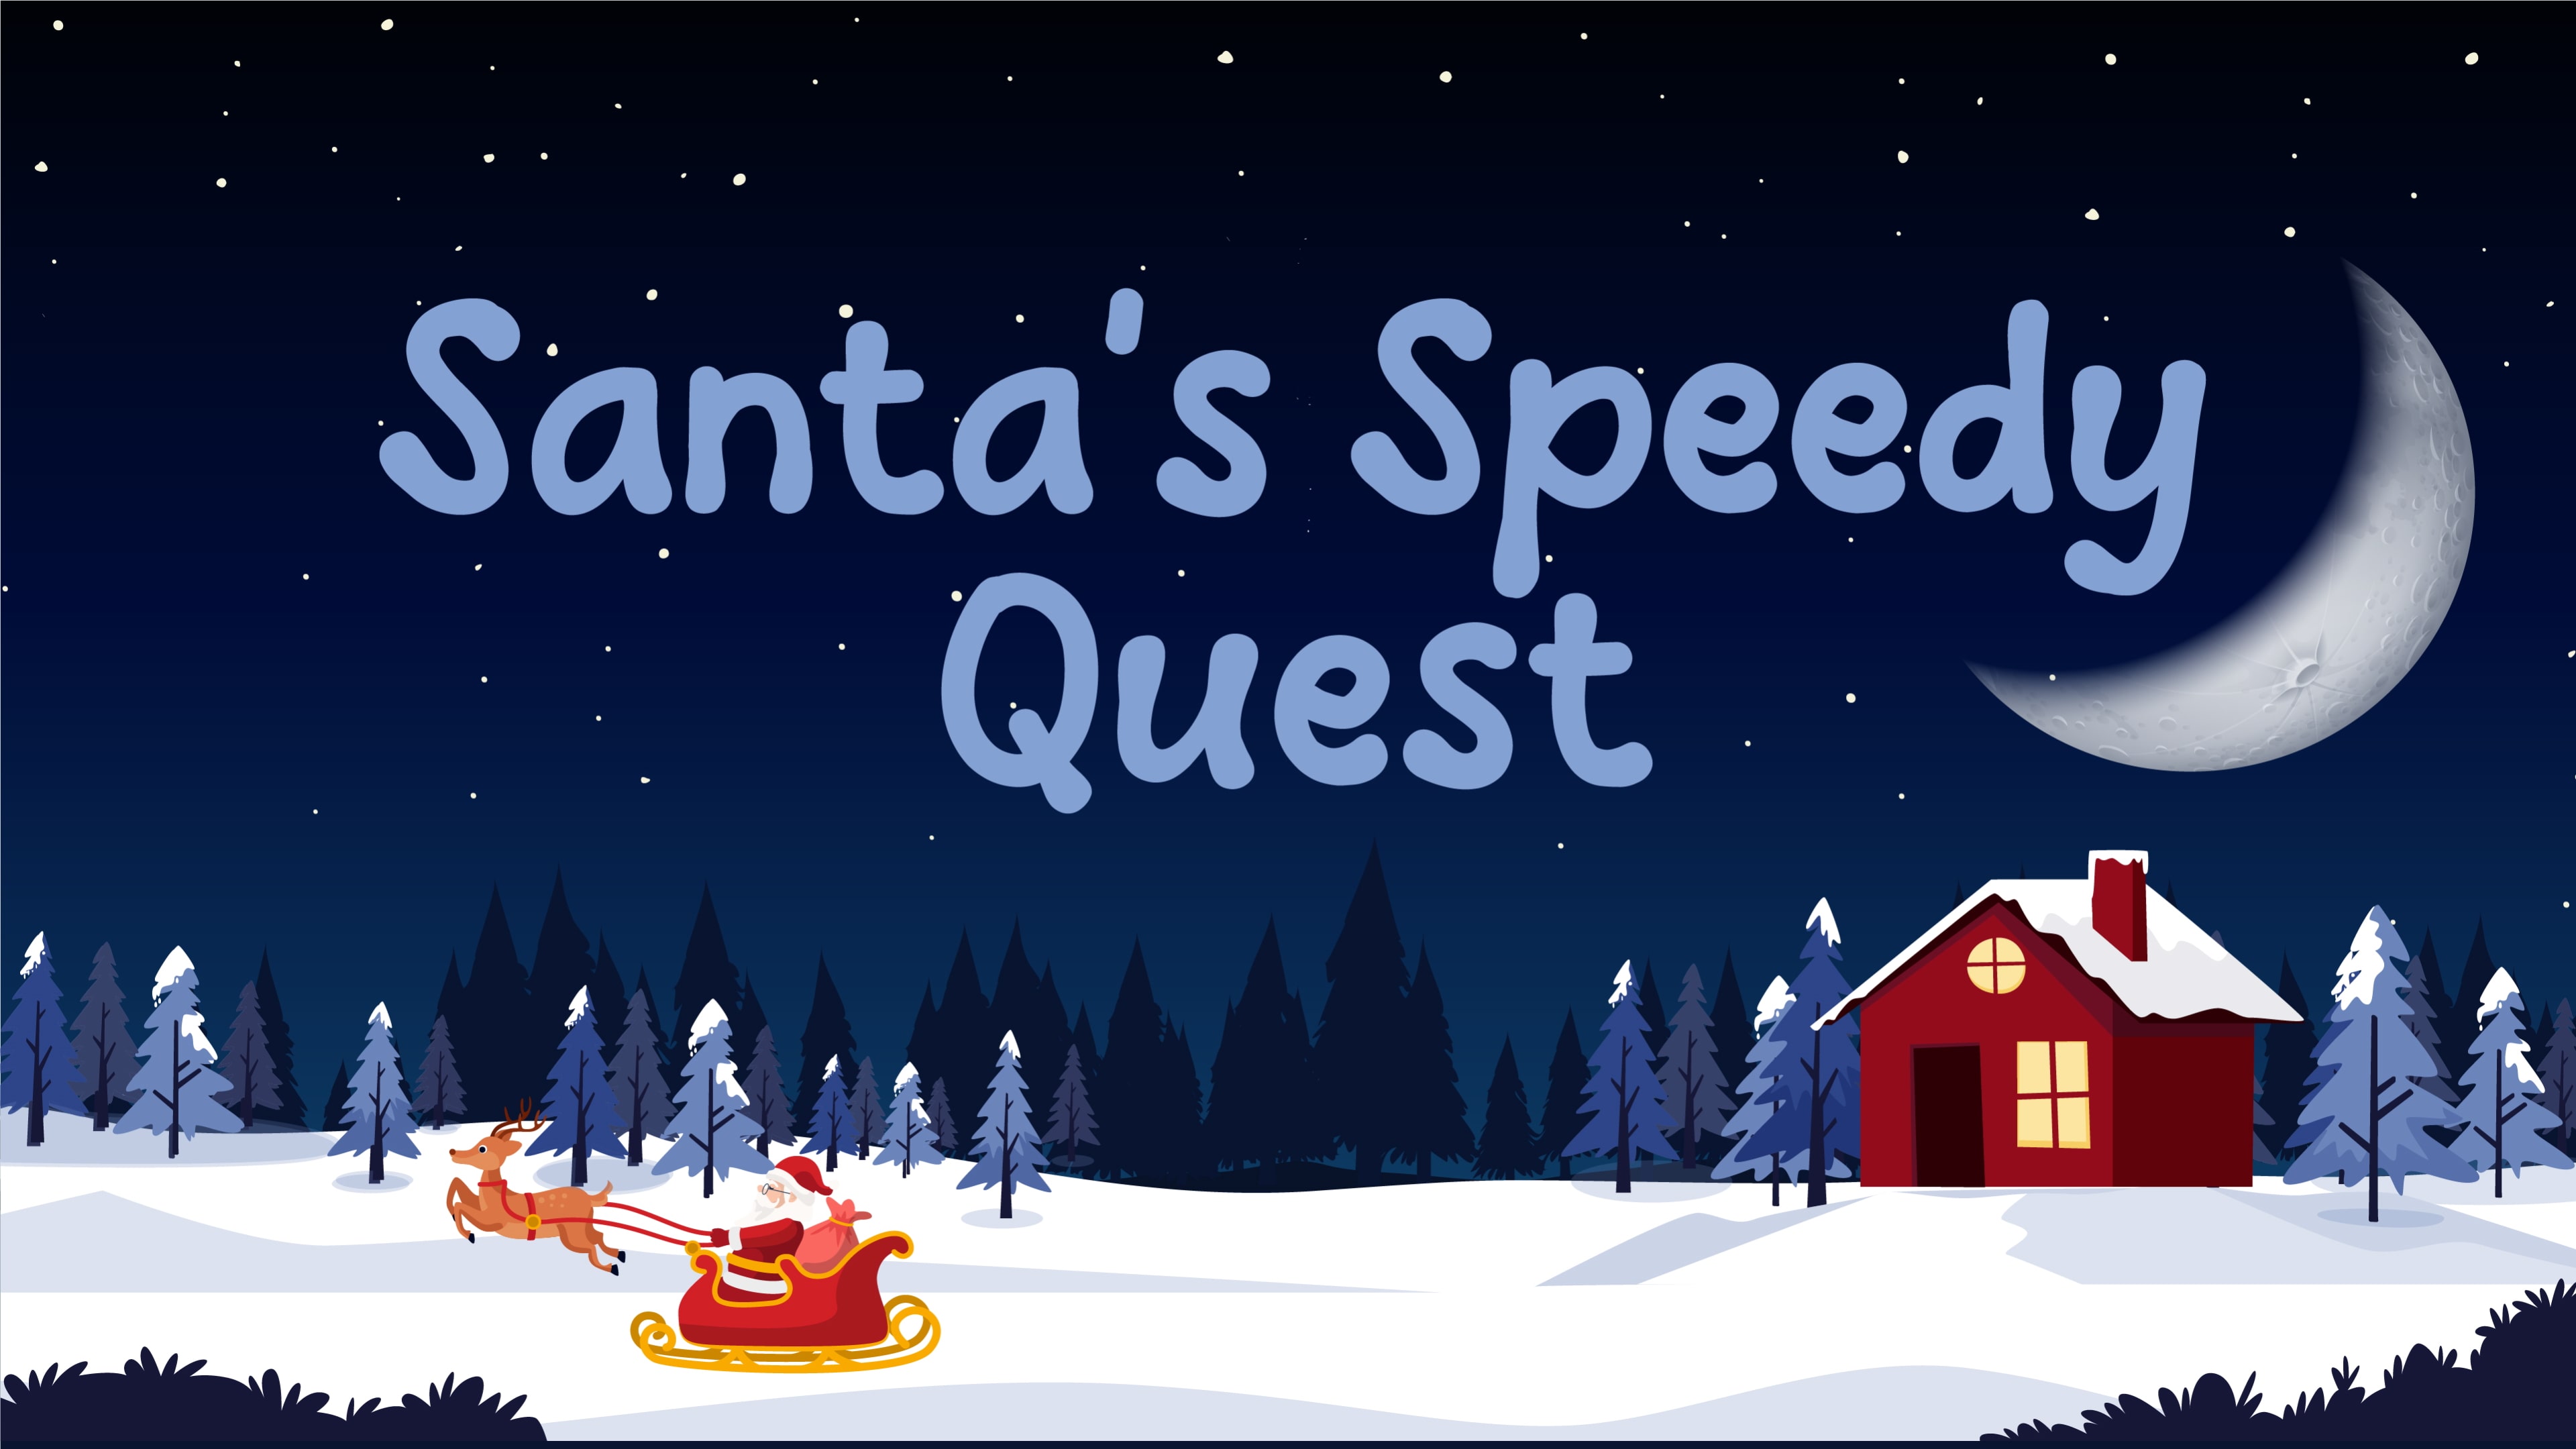 Santa's Speedy Quest (한국어, 영어, 일본어)